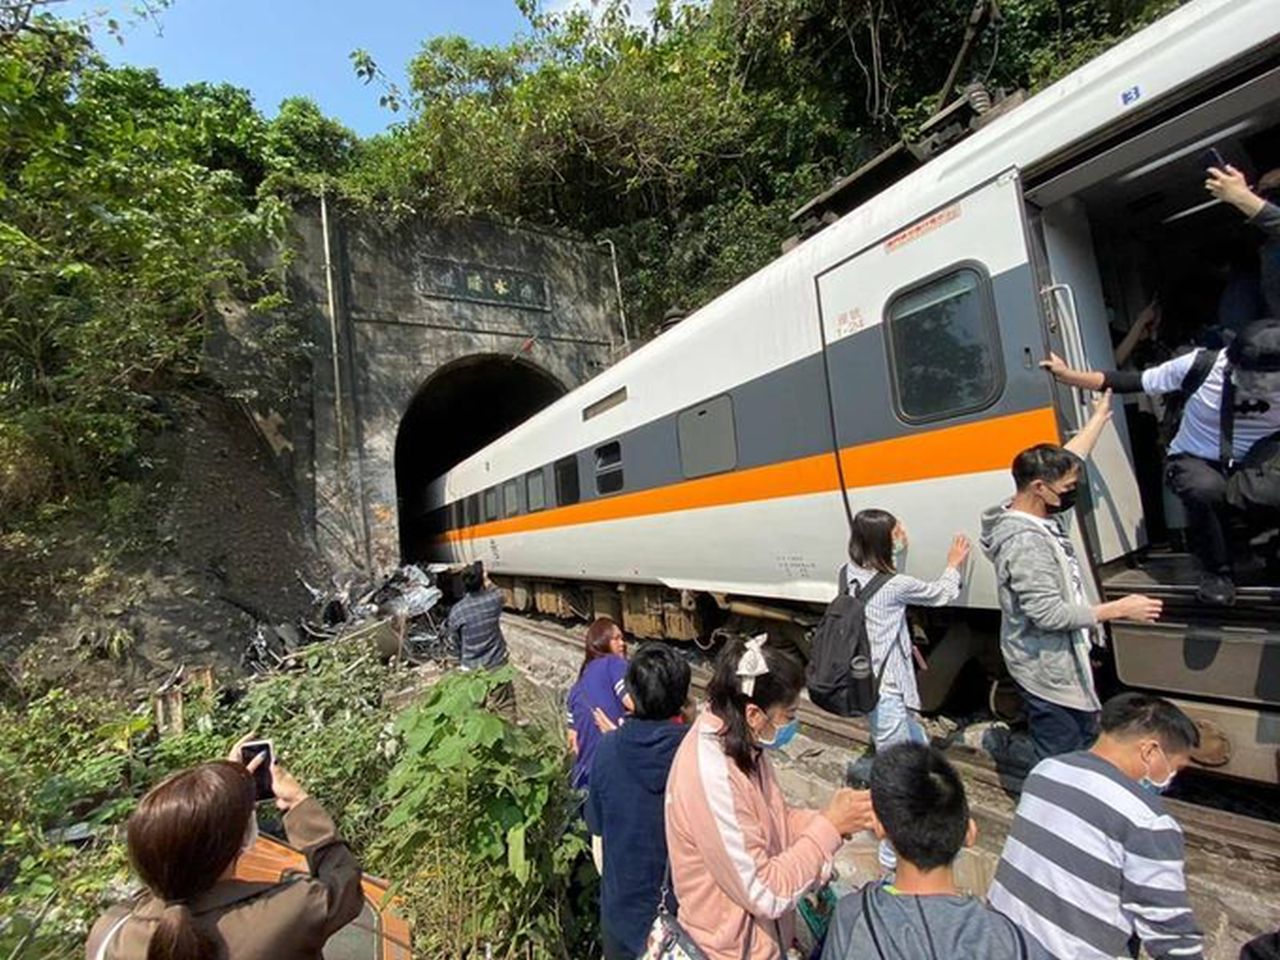 Vykolejení vlaku na Tchaj-wanu. Foto: https://twitter.com/W0lverineupdate